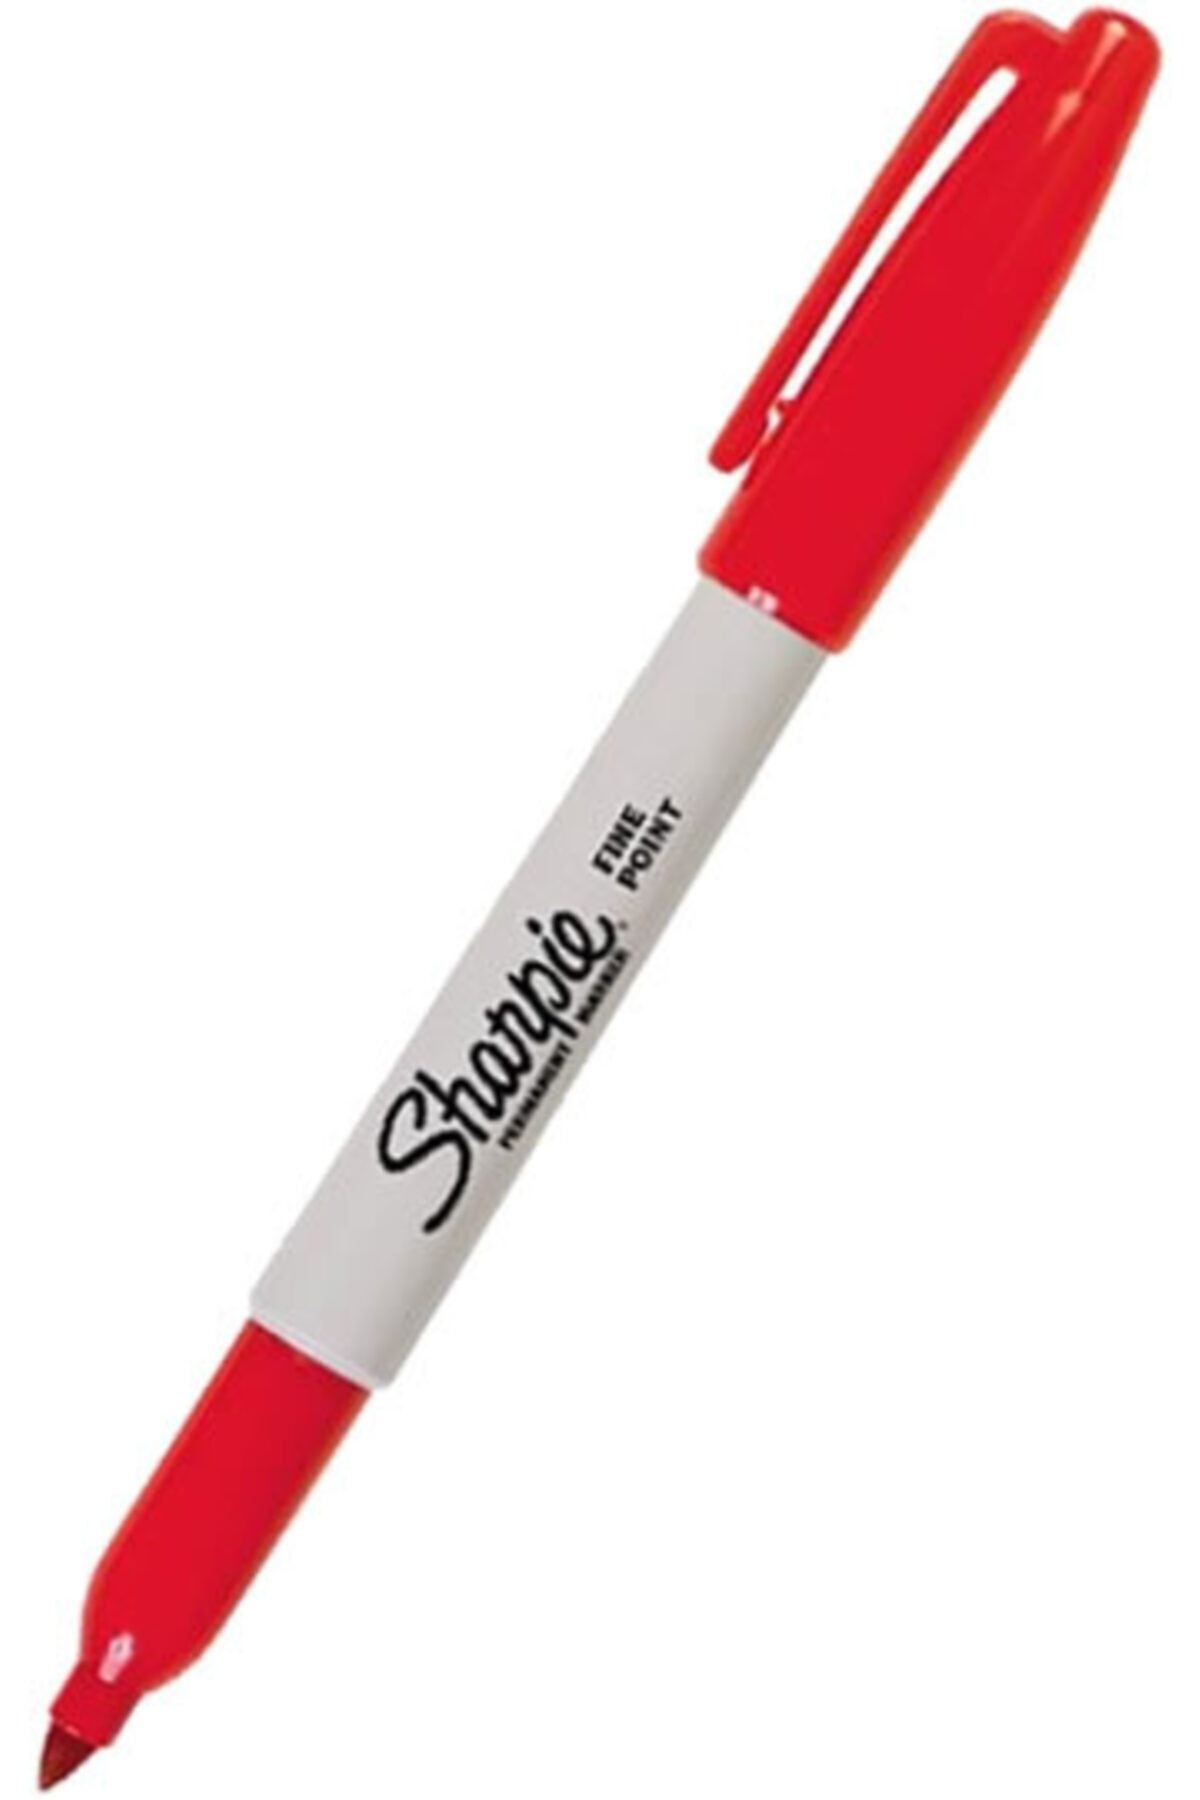 Sharpie Sharpıe Kırmızı Fıne Permanent Markör Kalem